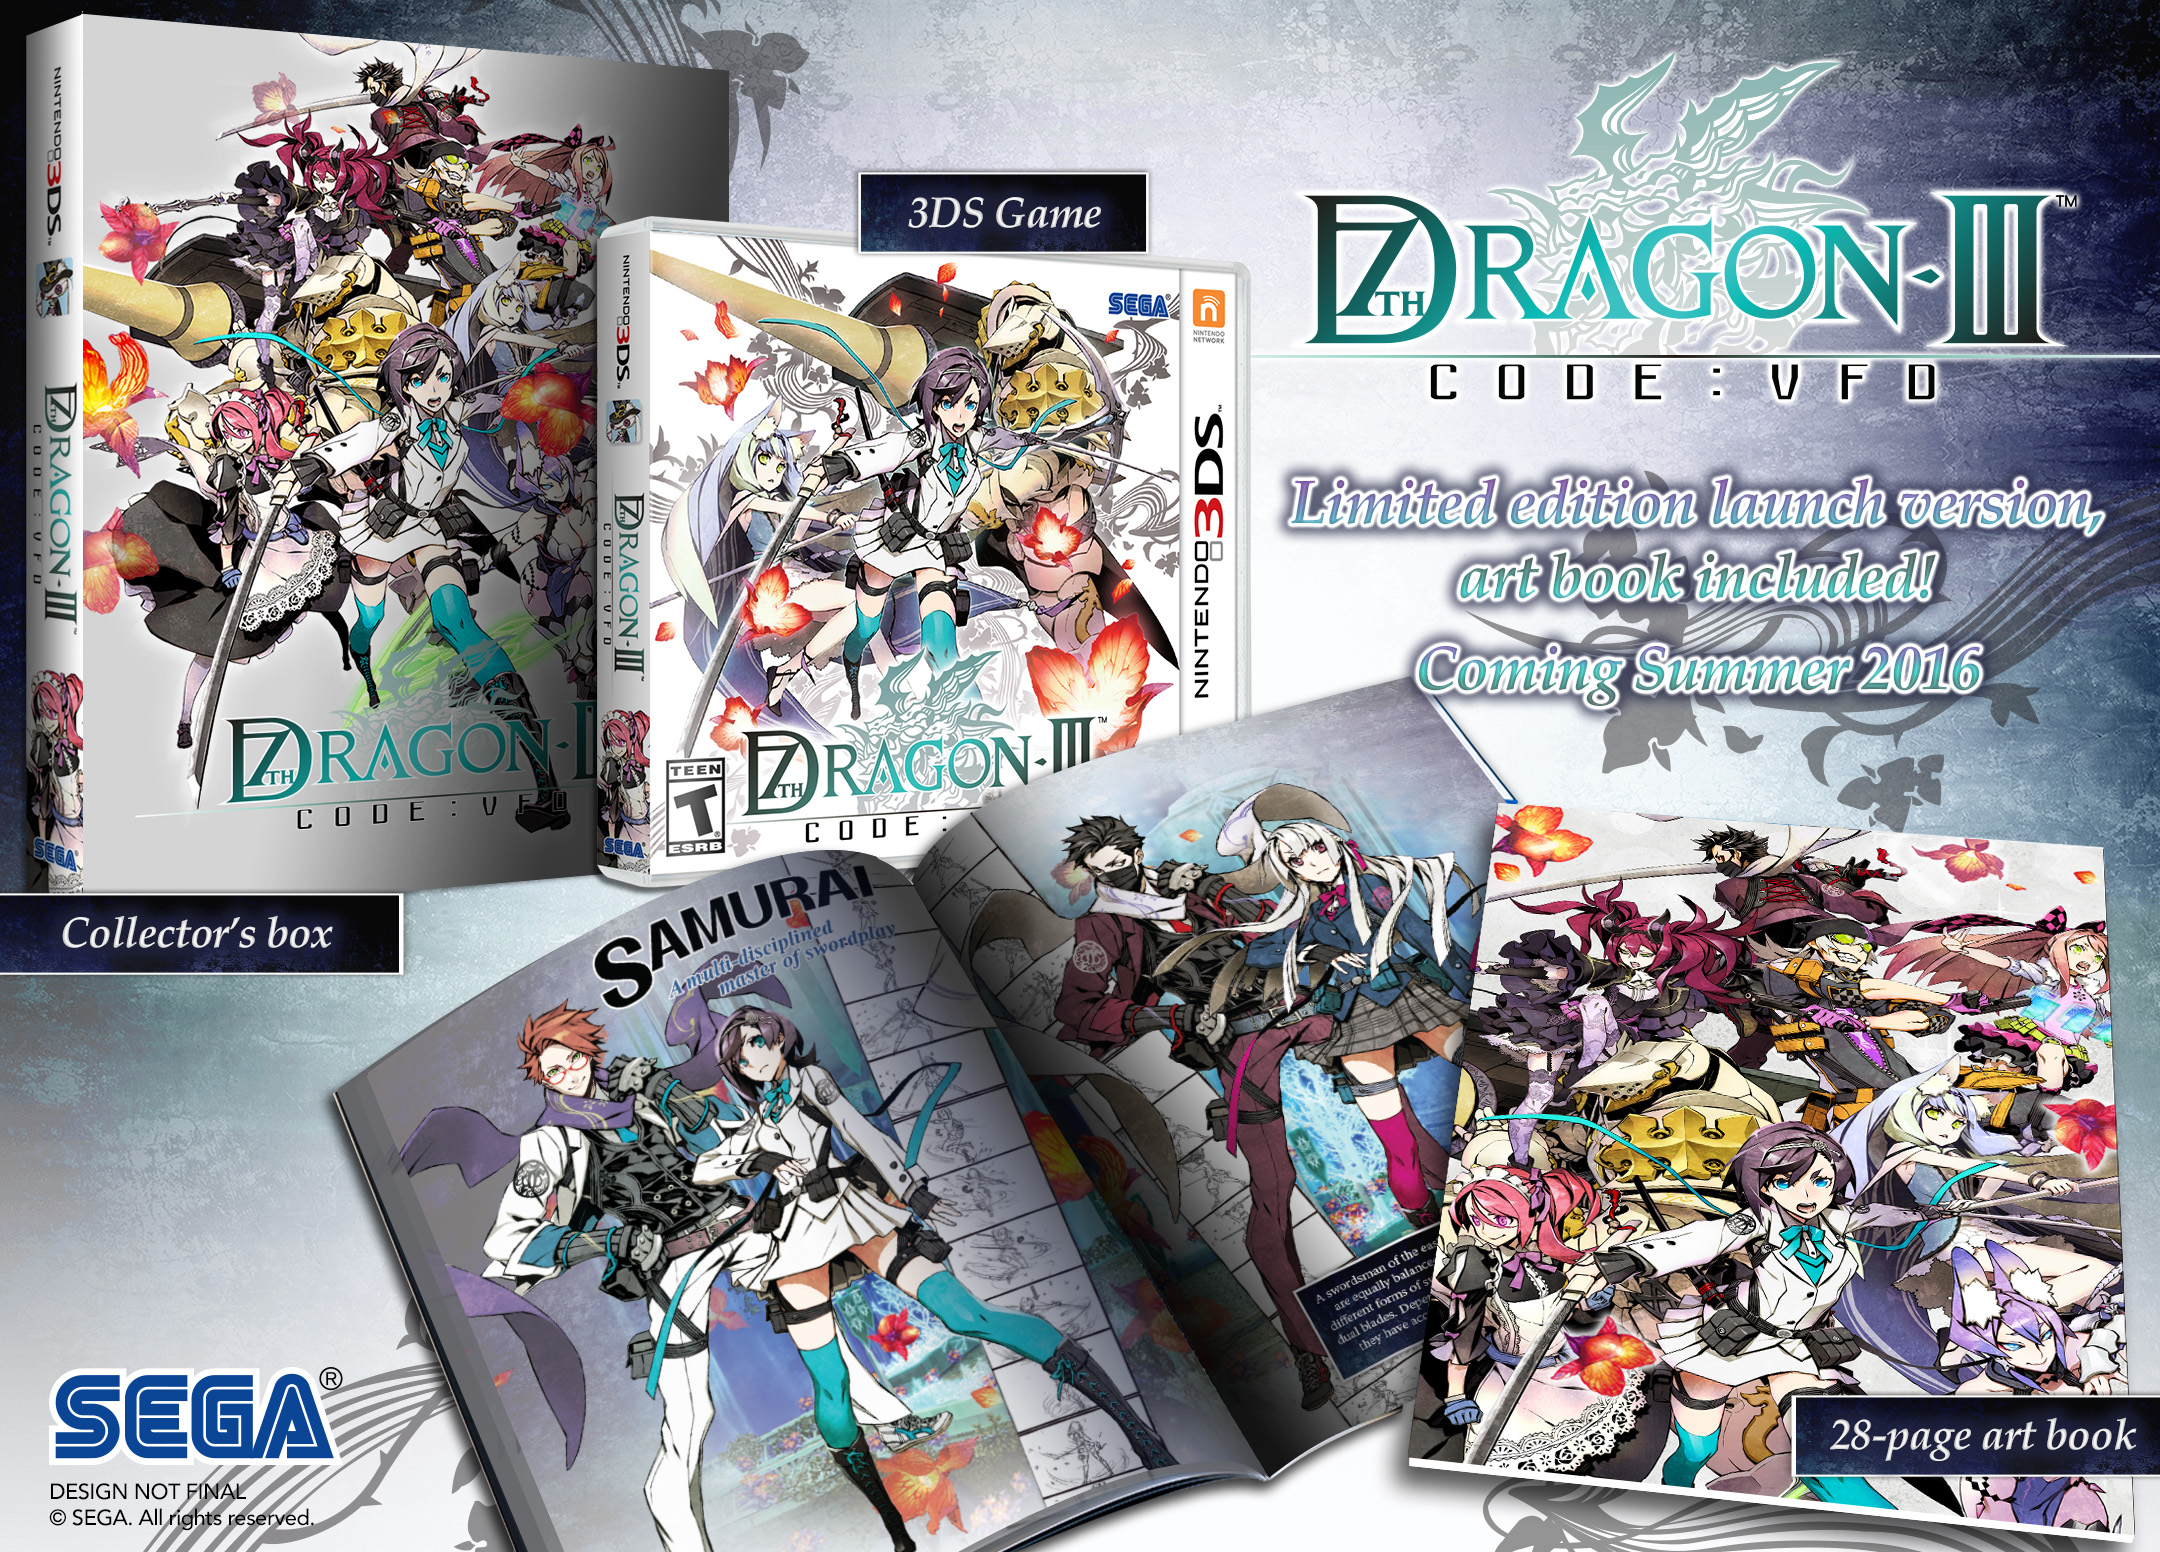 7th Dragon III Code VFD NA limited edition